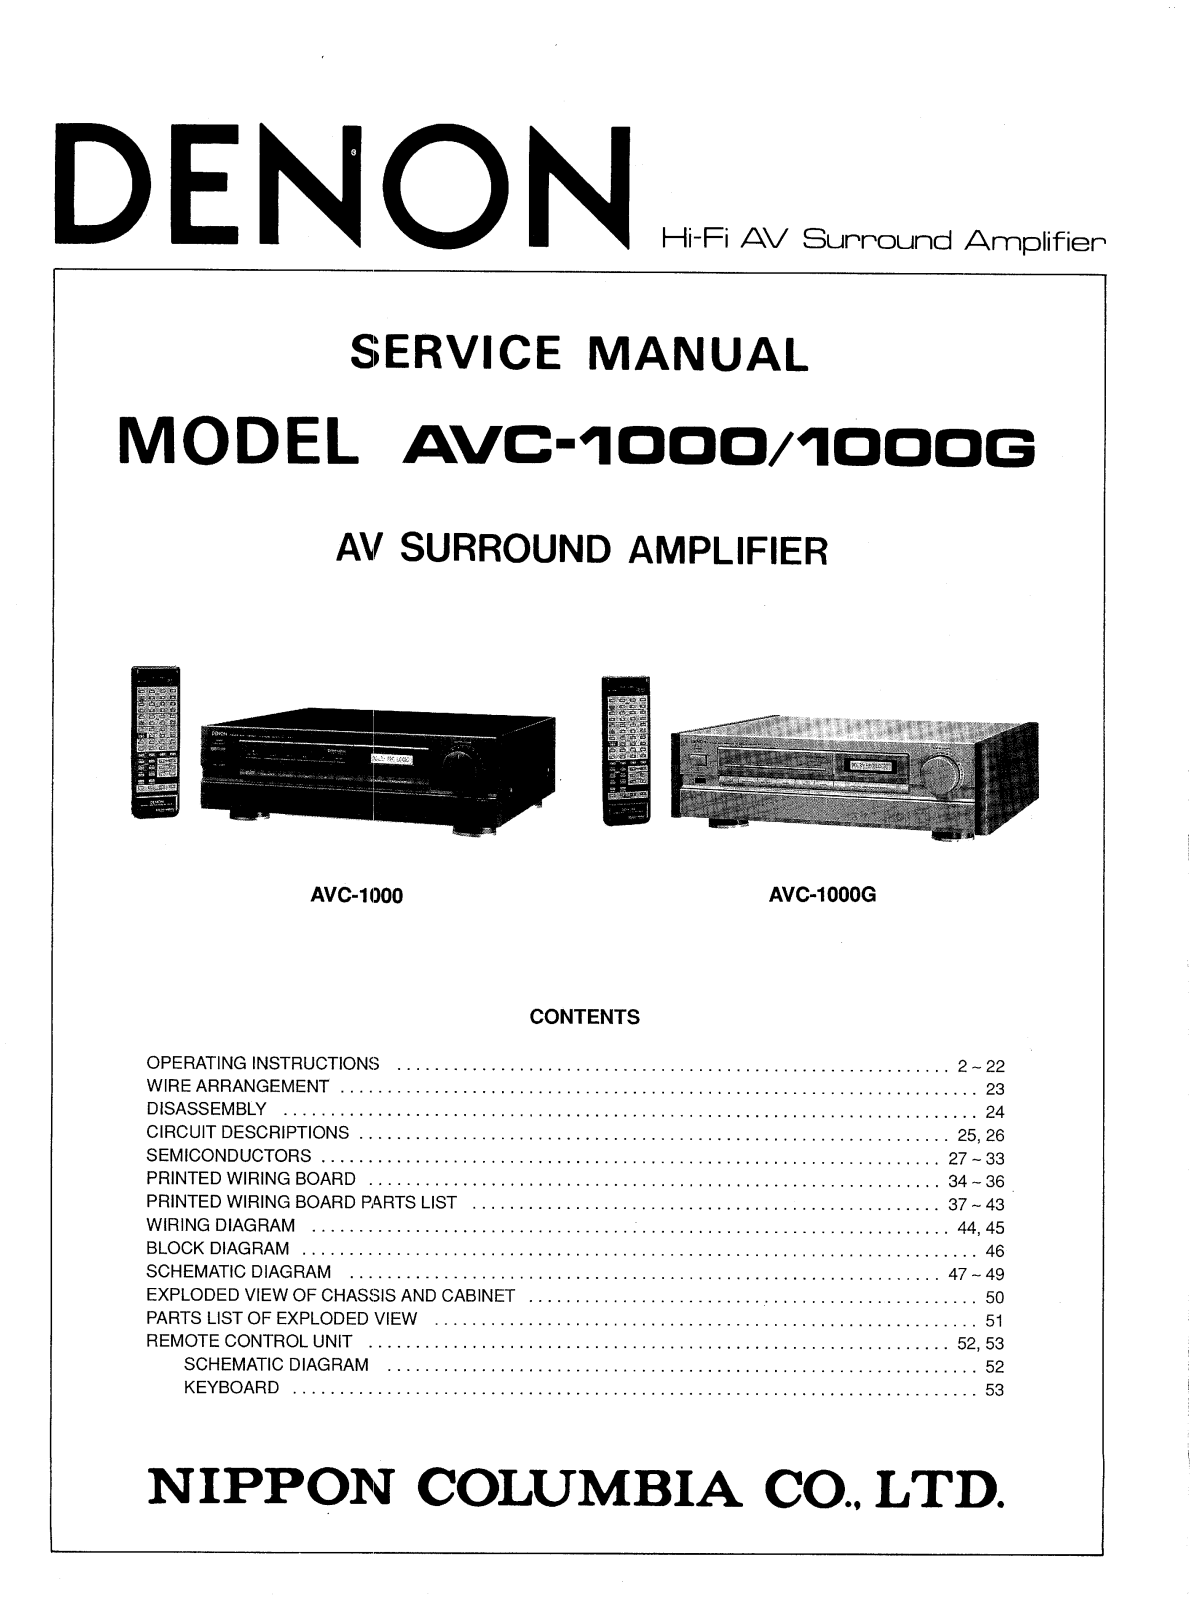 Denon AVC-1000G SERVICE MANUAL